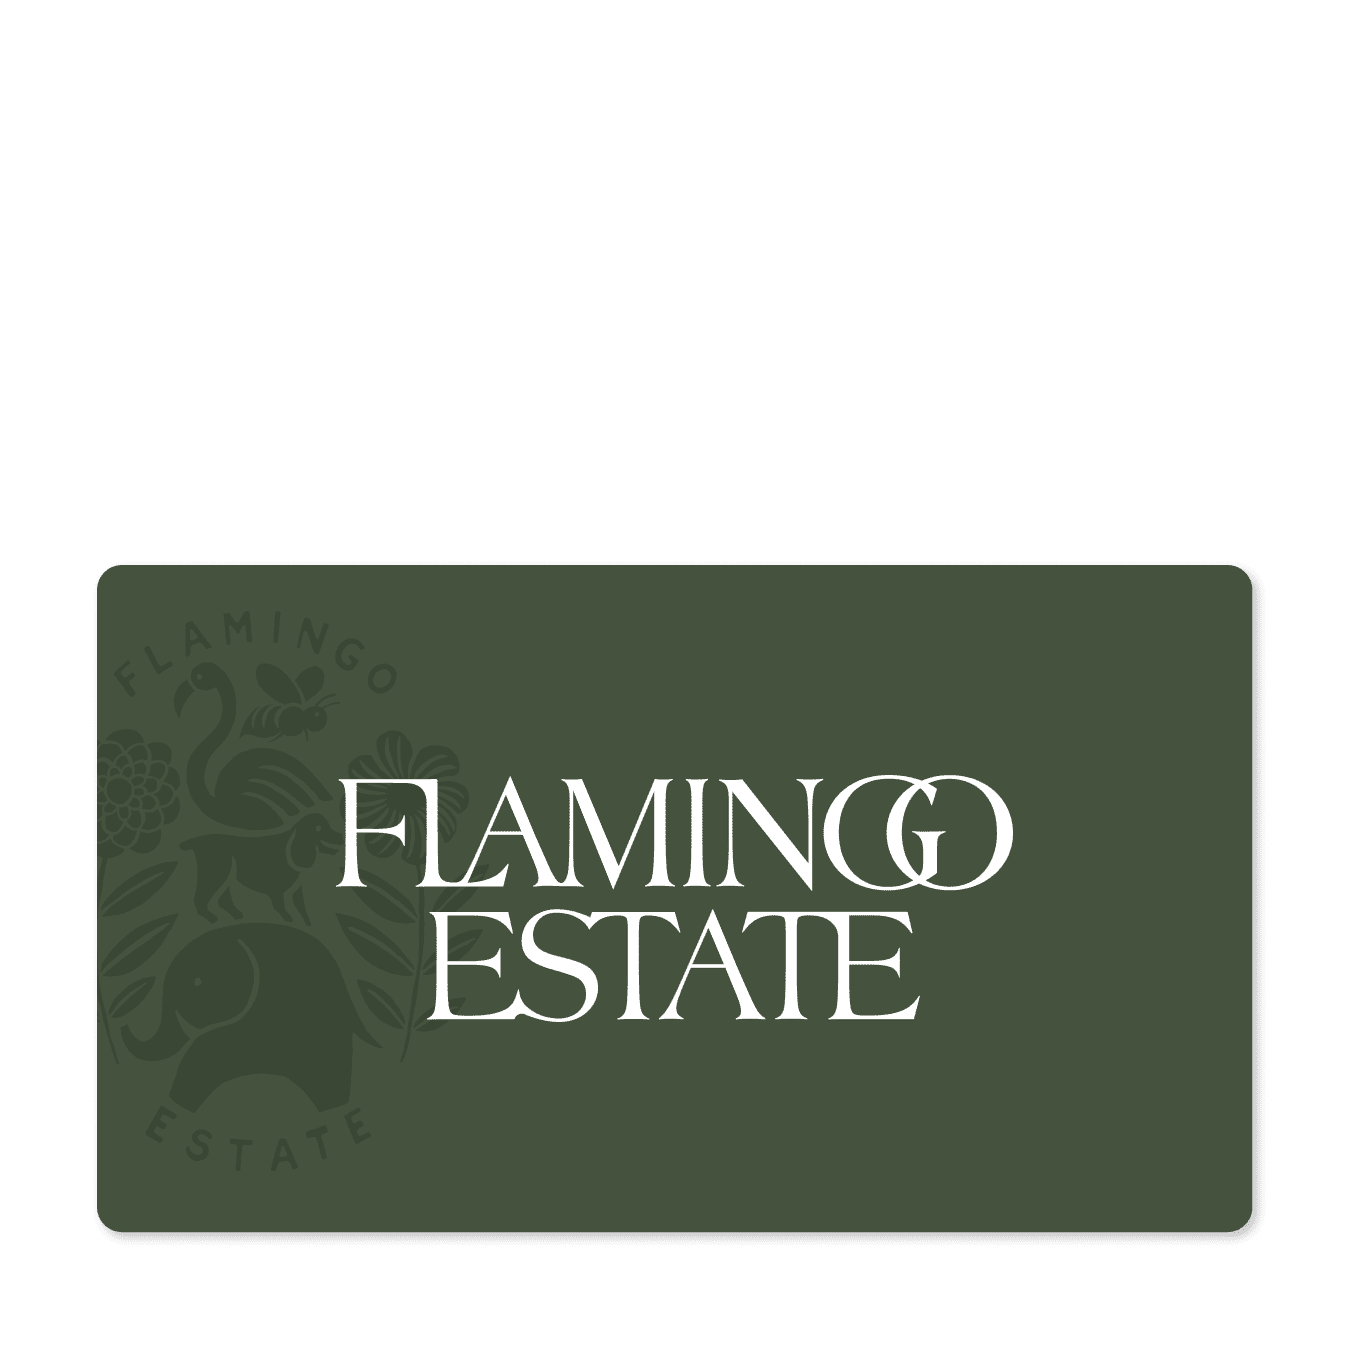 Flamingo Estate Card